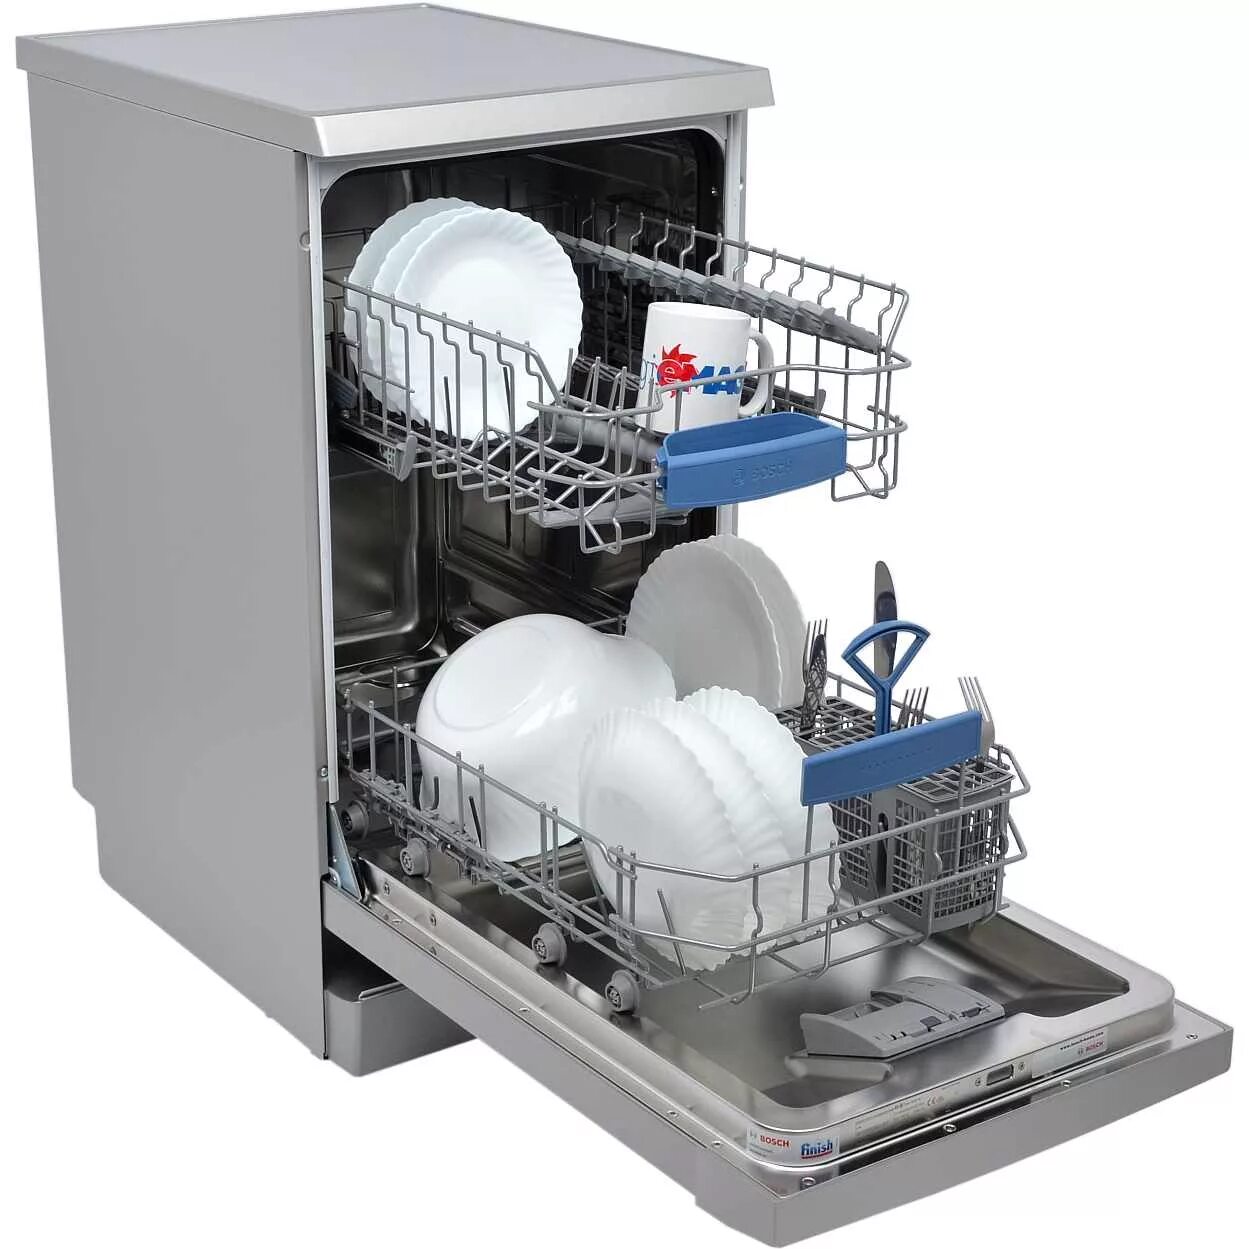 Посудомоечная машина Bosch sps2ikw1br. Посудомоечная машина Neff s855hmx50r. ПММ бош sps53. Посудомоечная машина Bosch spv6hmx1mr. Посудомоечные машины 3 комплекта